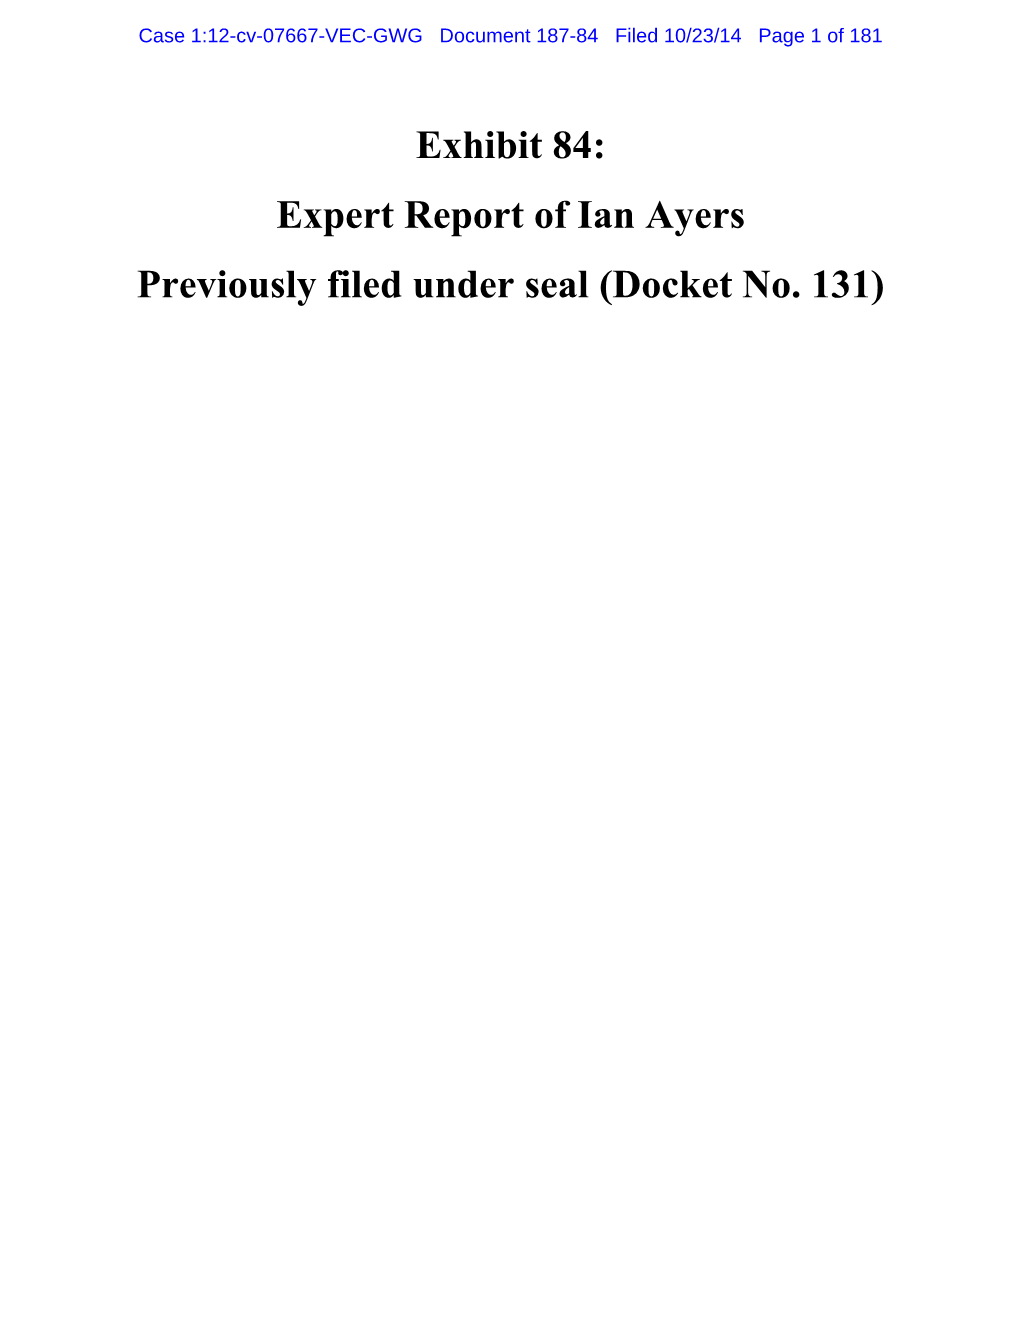 Ayers Expert Report